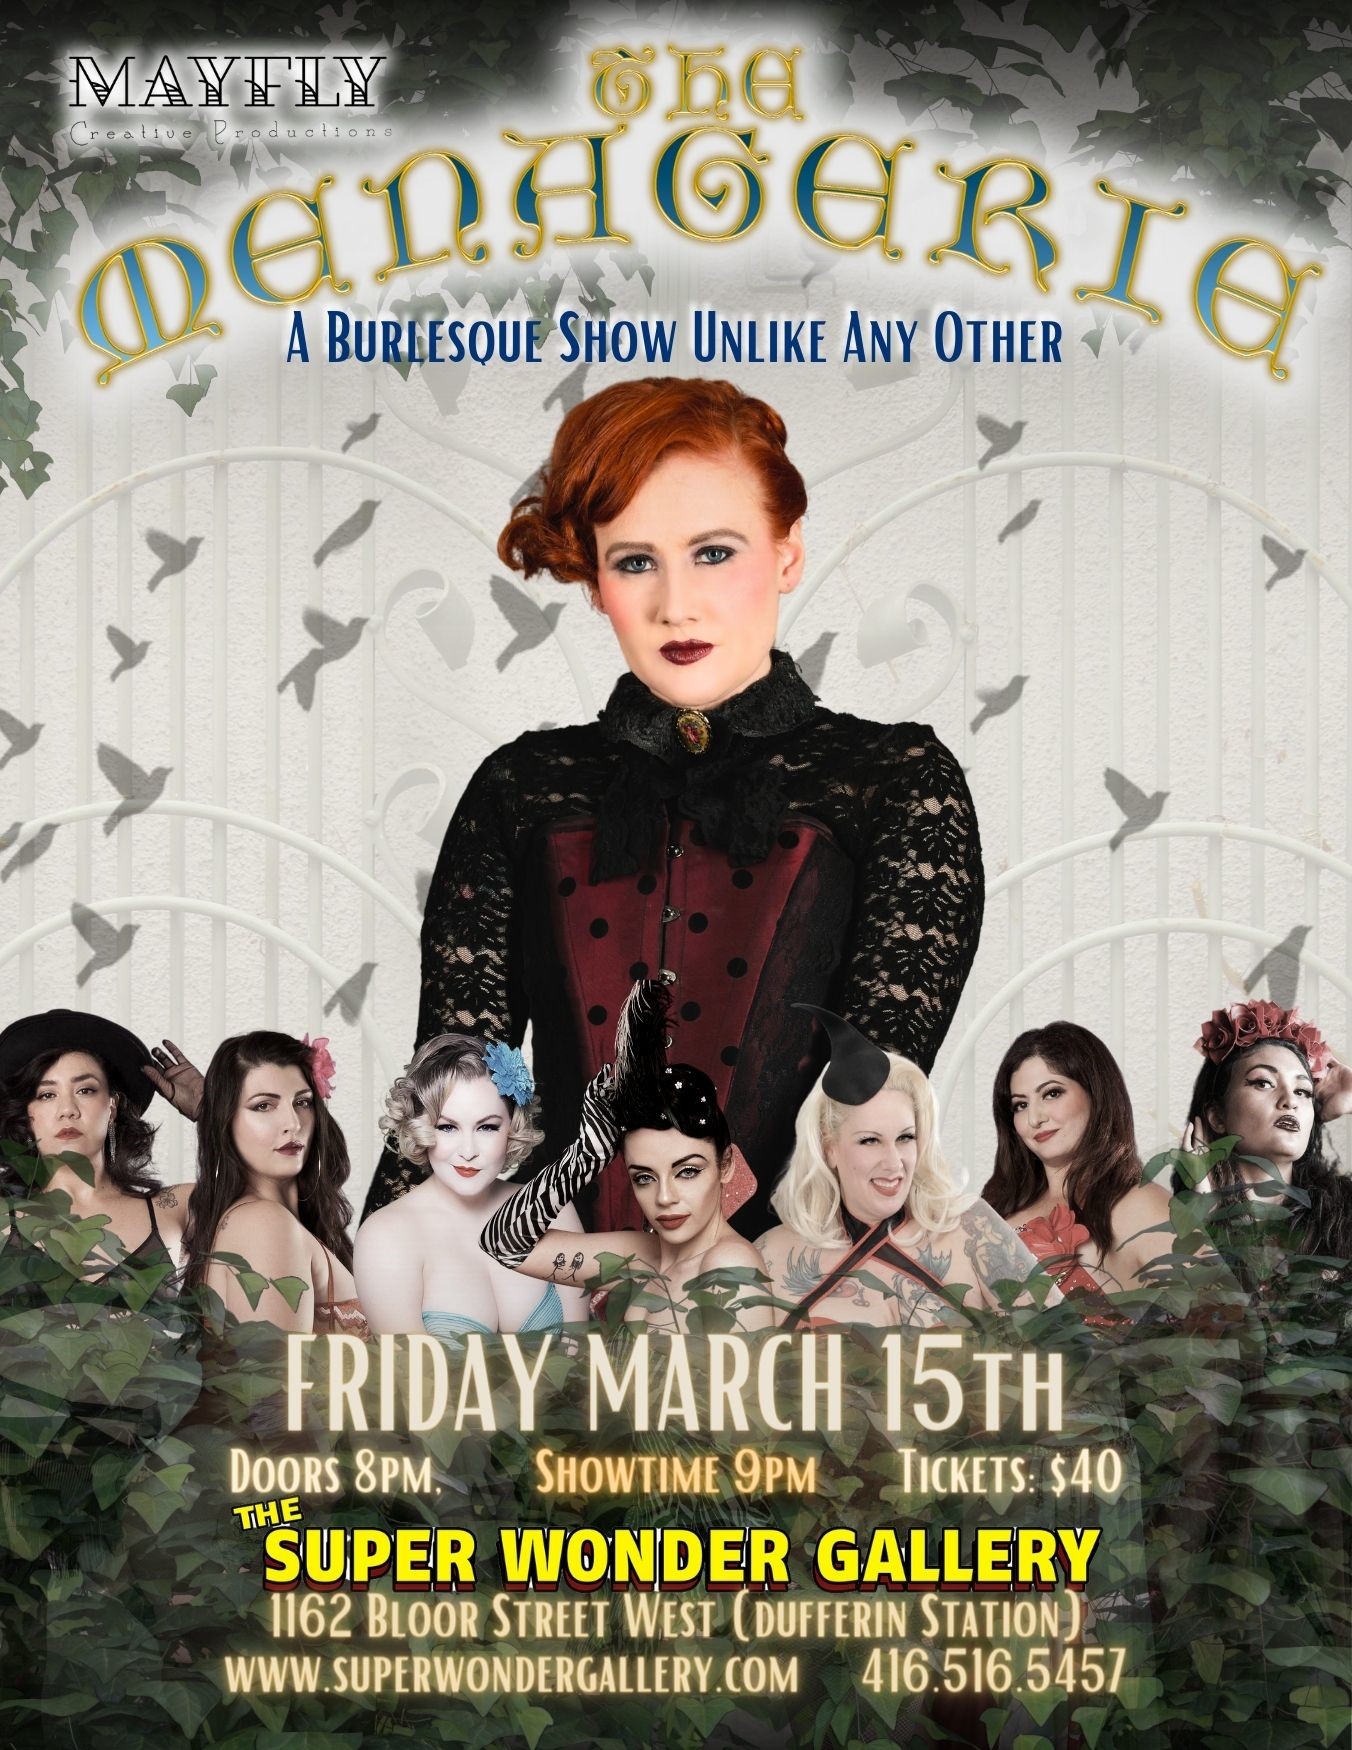 The MENAGERIE A Burlesque Show Unlike Any Other on mars 15, 20:00@SUPER WONDER GALLERY - Achetez des billets et obtenez des informations surSuper Wonder Gallery 